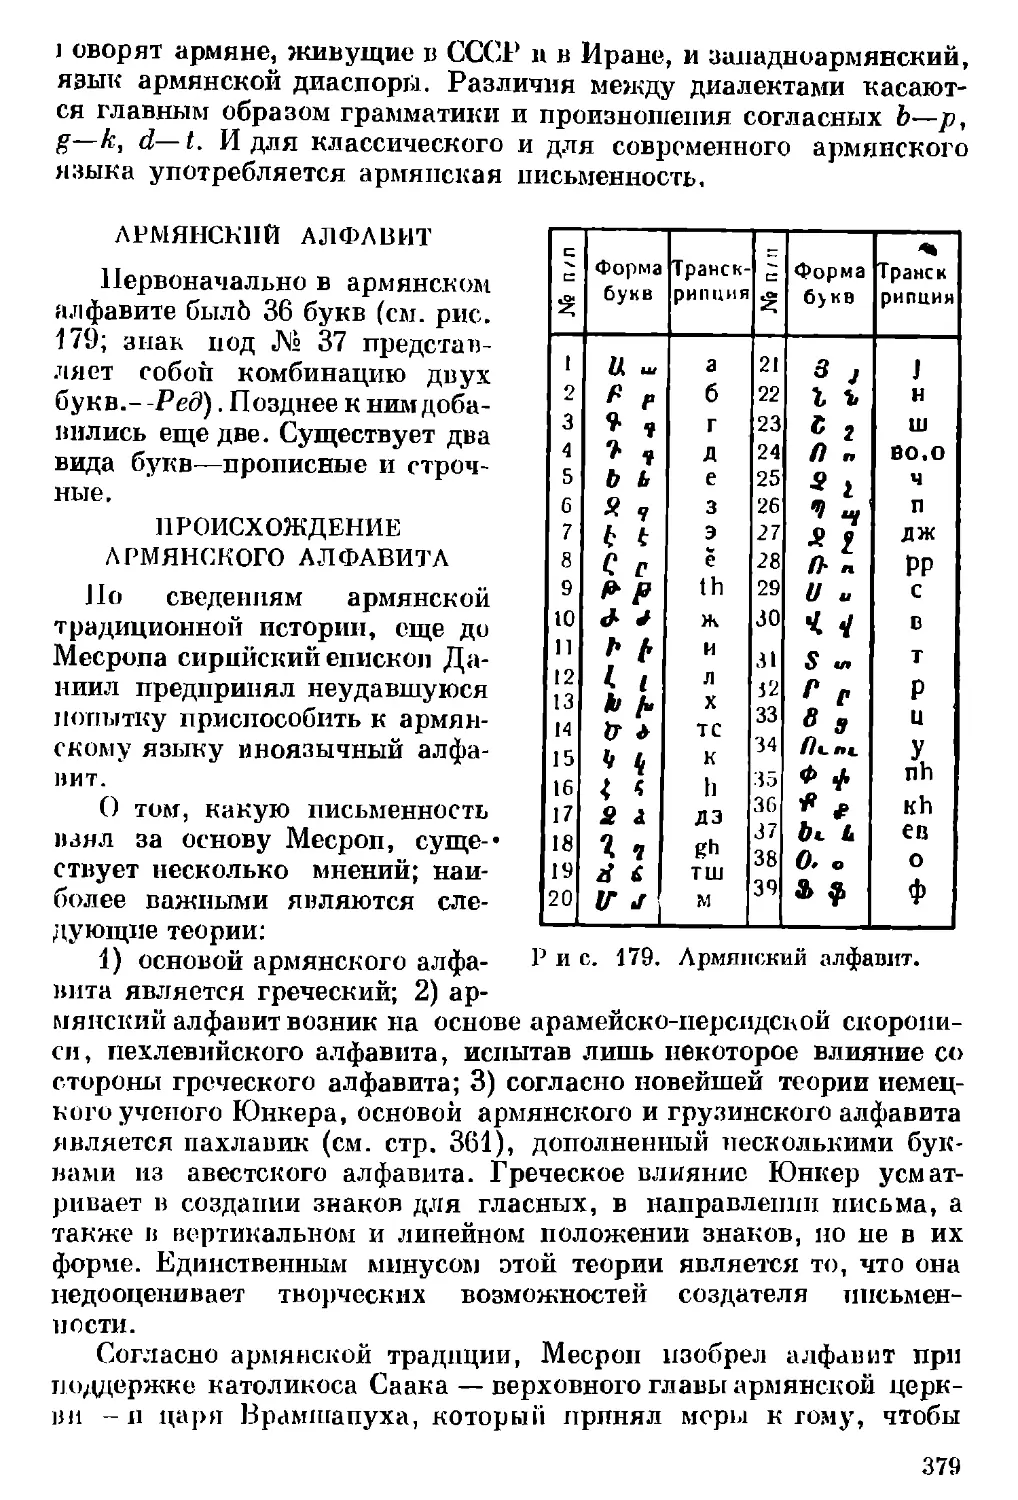 Армянский алфавит
Происхождение армянского алфавита